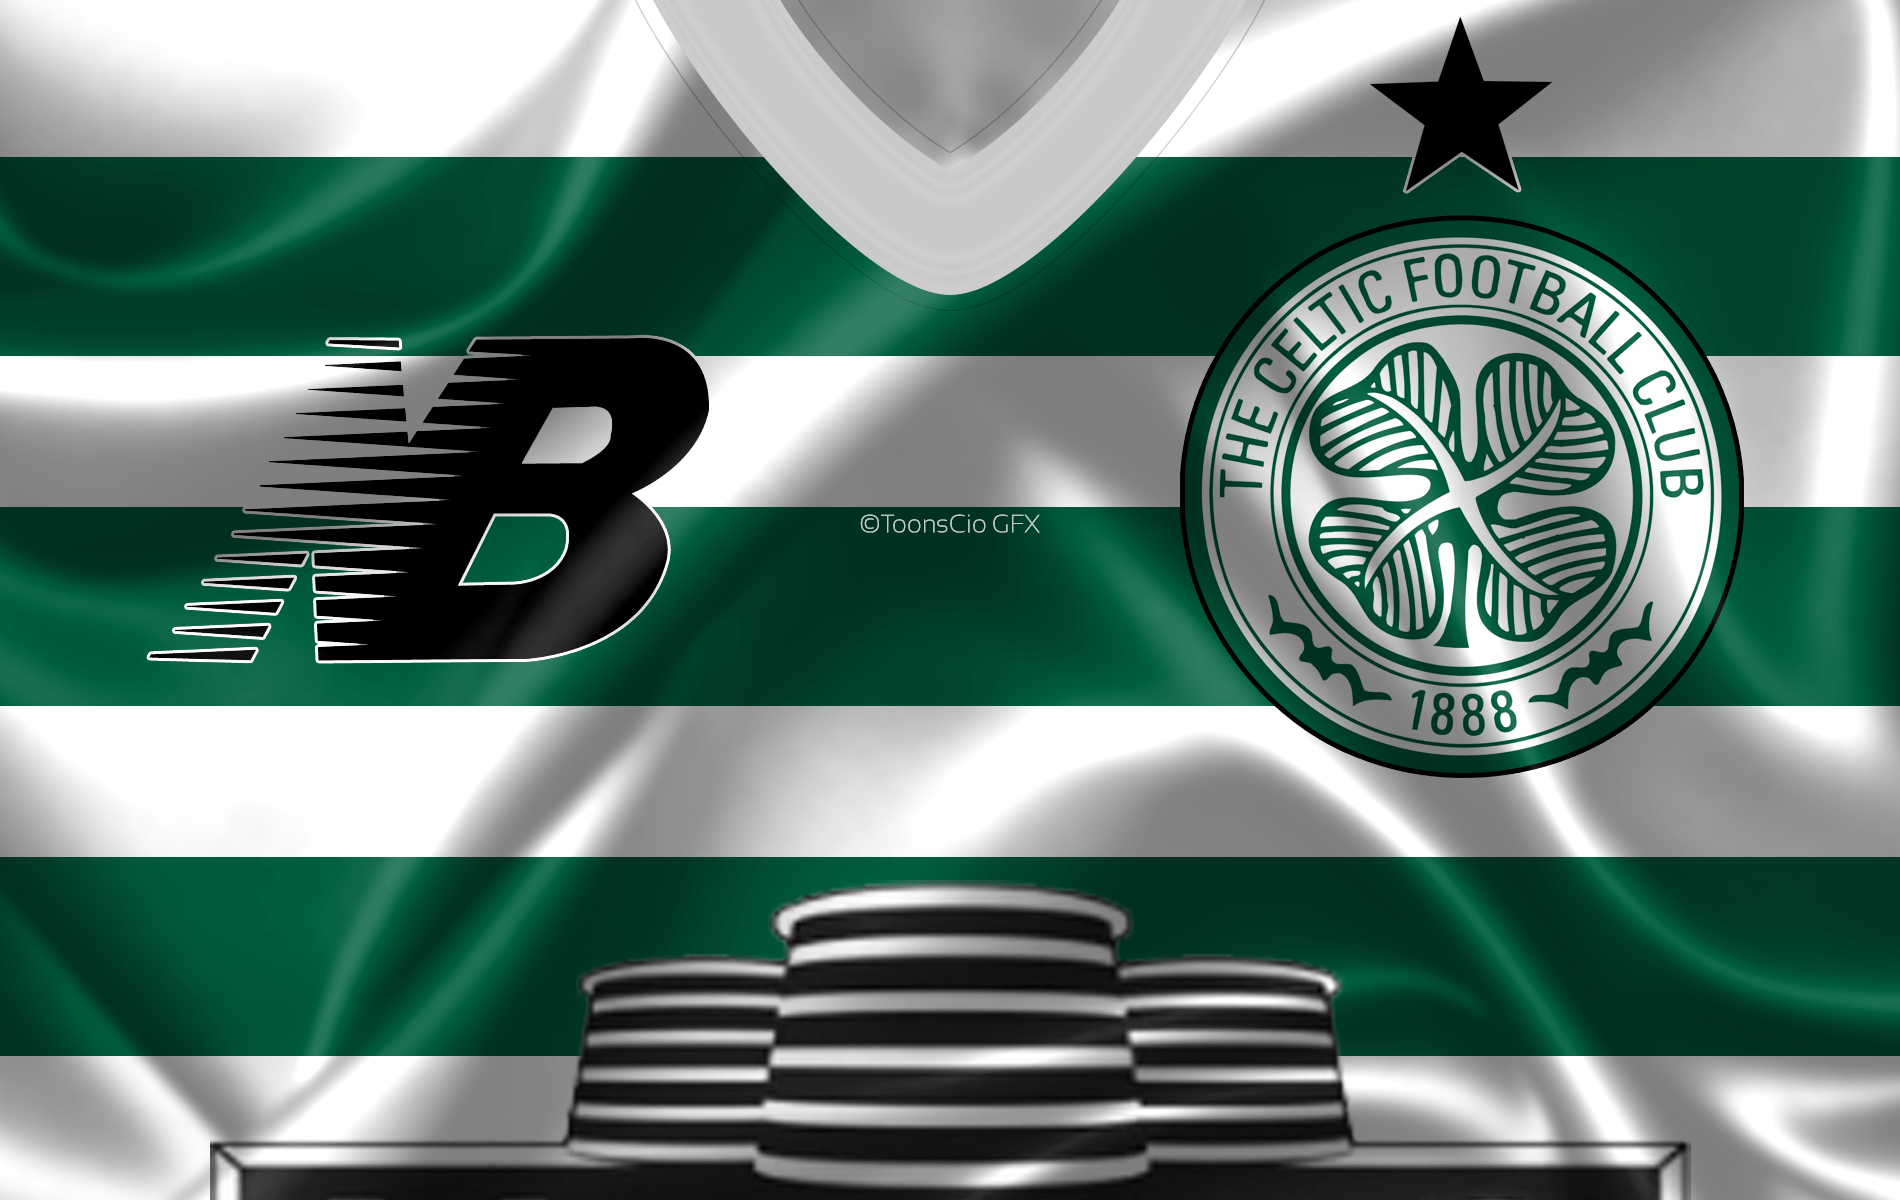 Celtic FC HD Wallpaper free